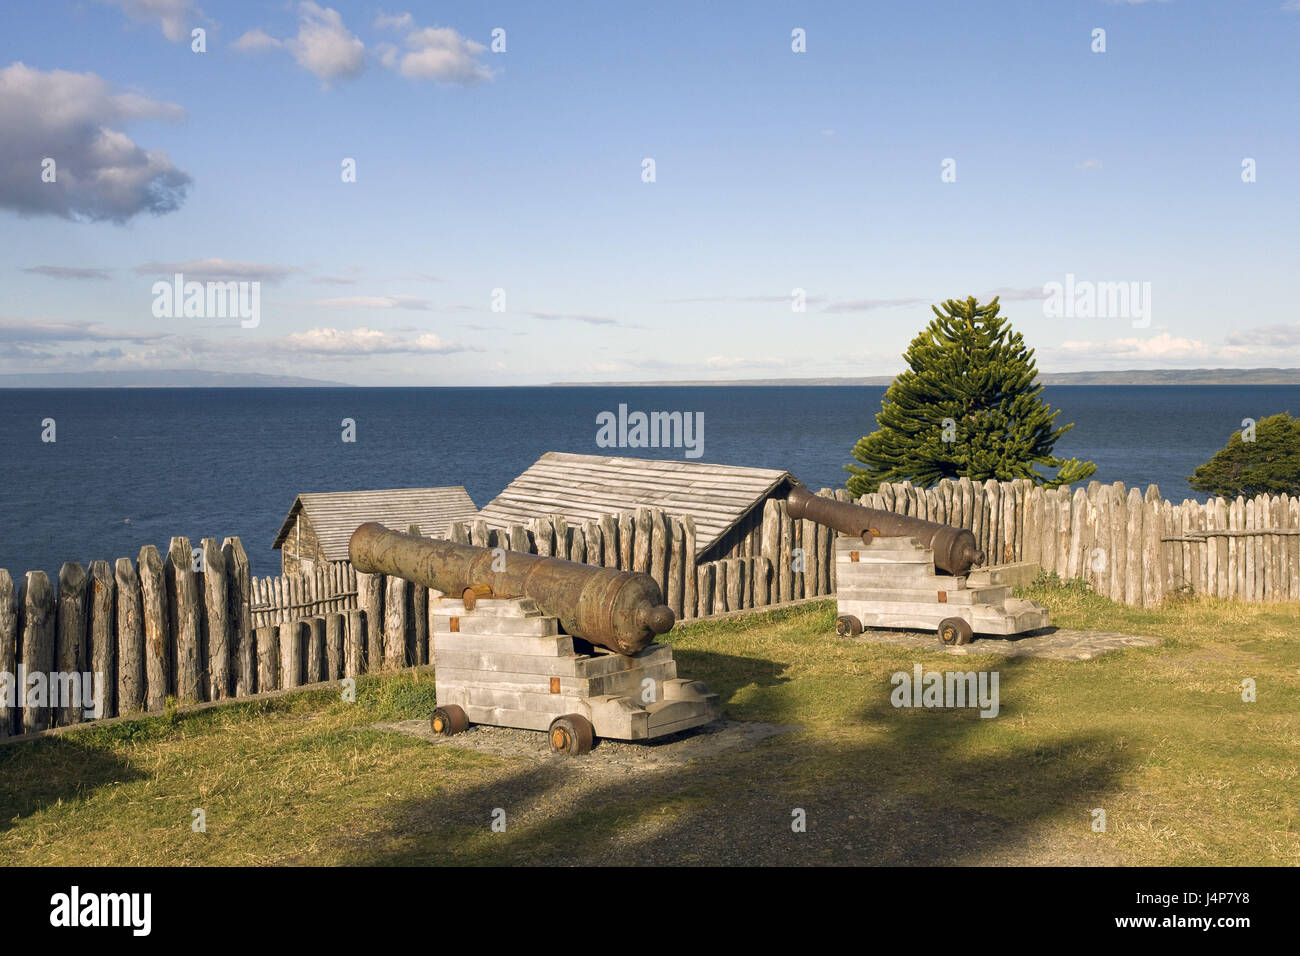 Chile, Patagonia, Punta Arenas, Fuerte Bulnes, timber houses, cannons, Stock Photo